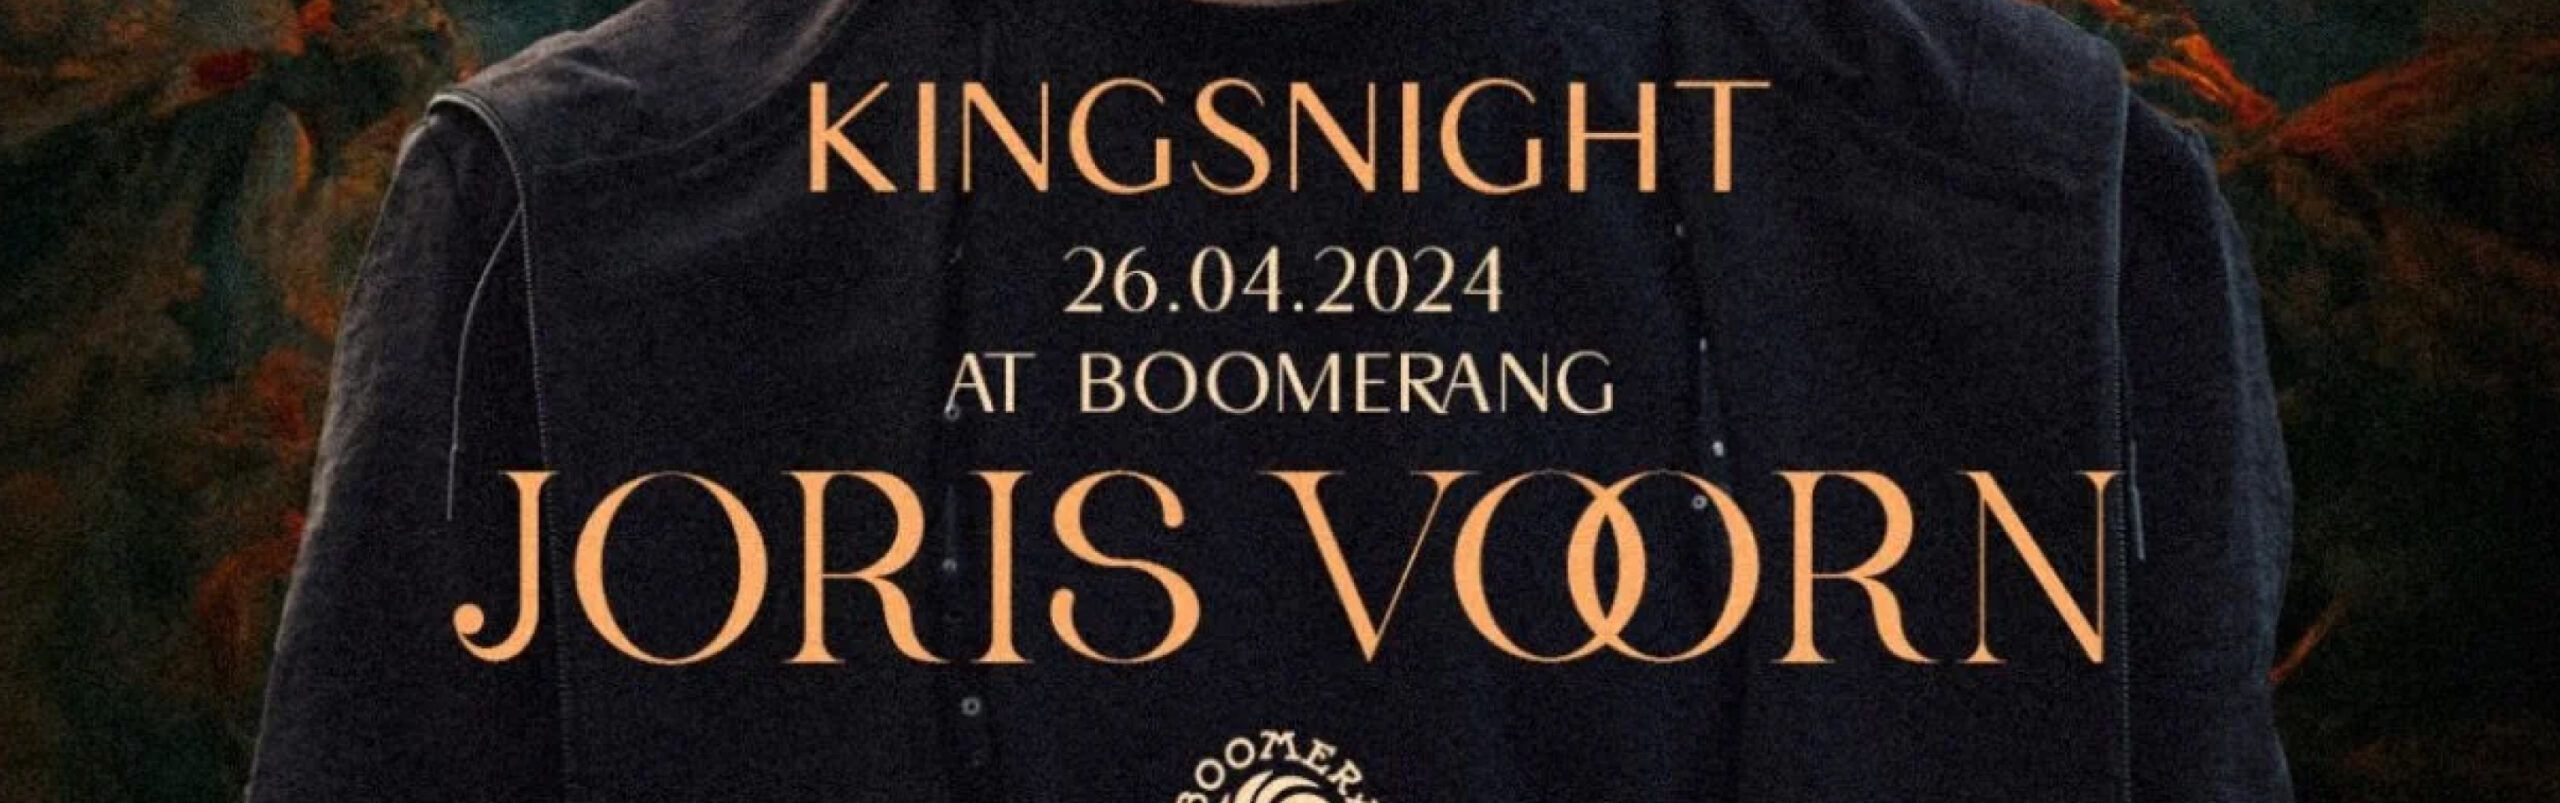 Joris Voorn Kingsnight header